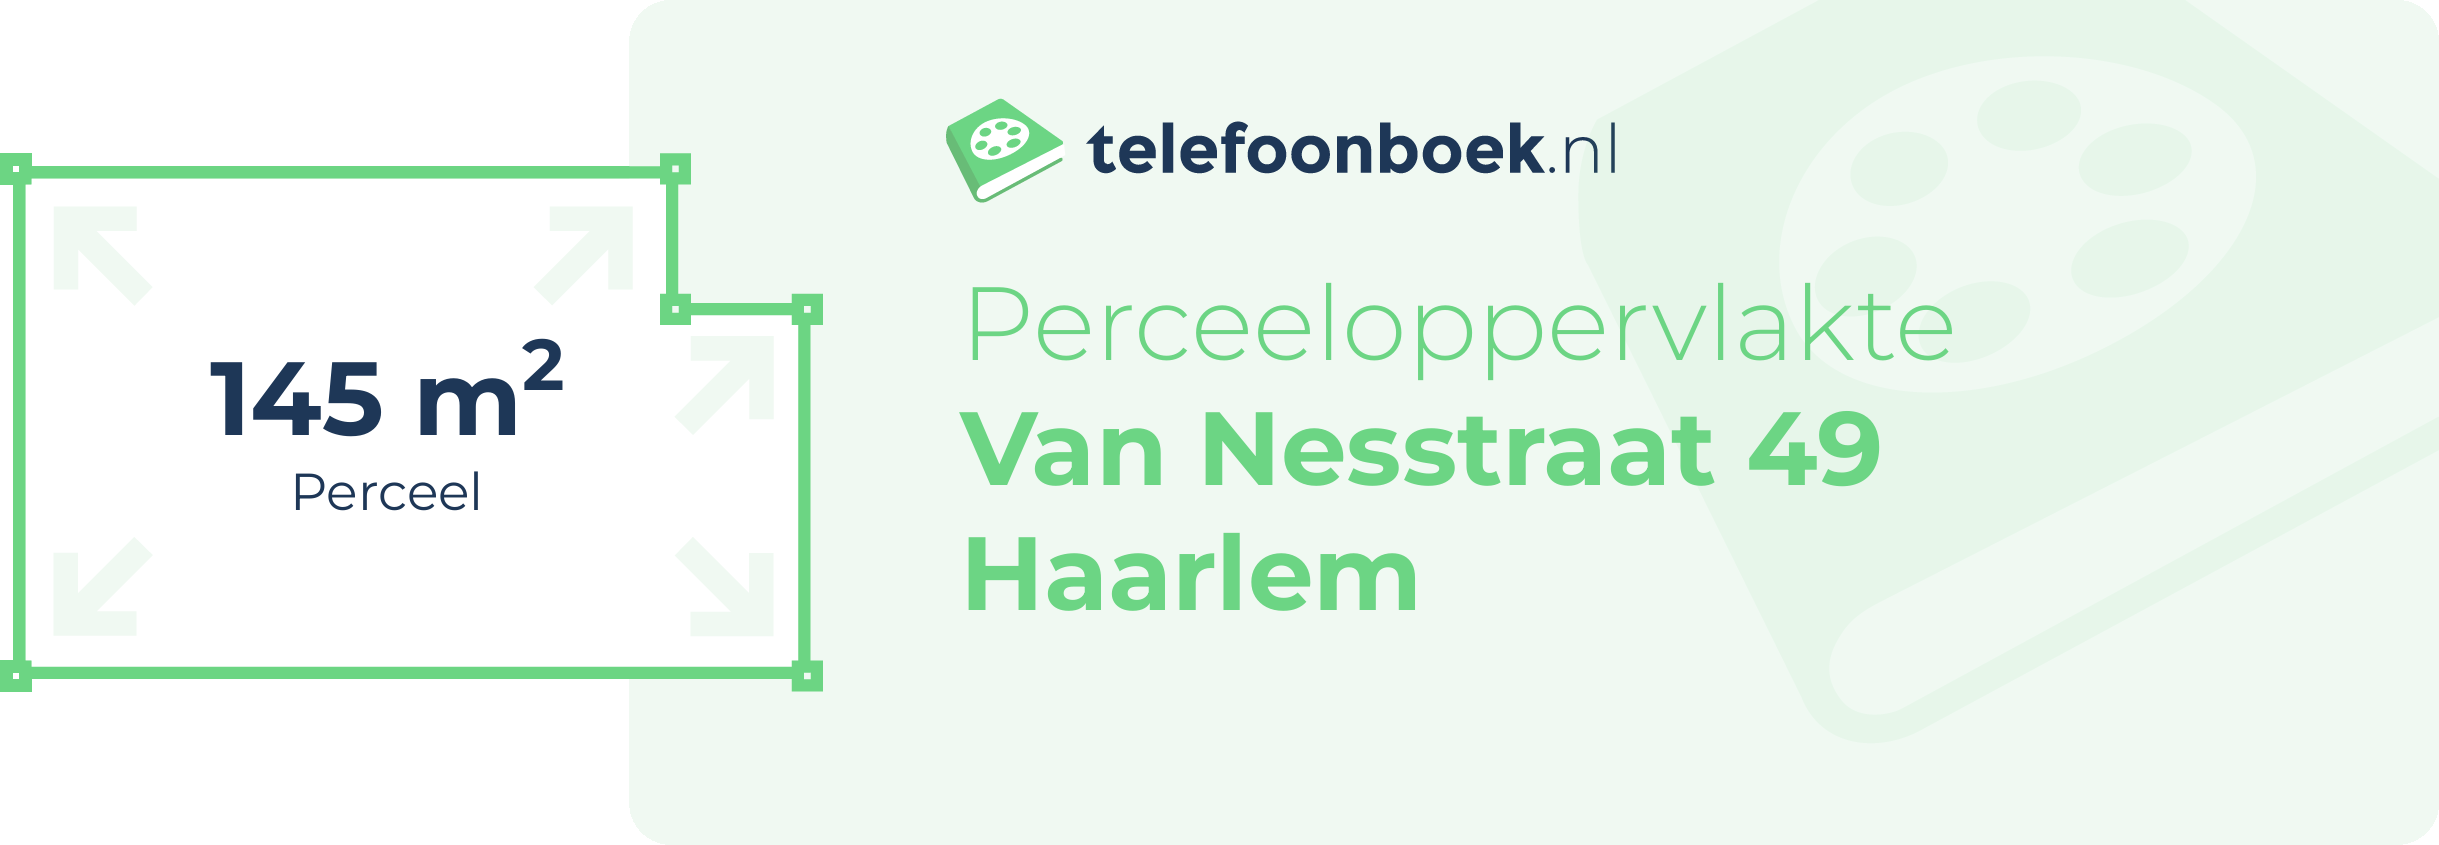 Perceeloppervlakte Van Nesstraat 49 Haarlem